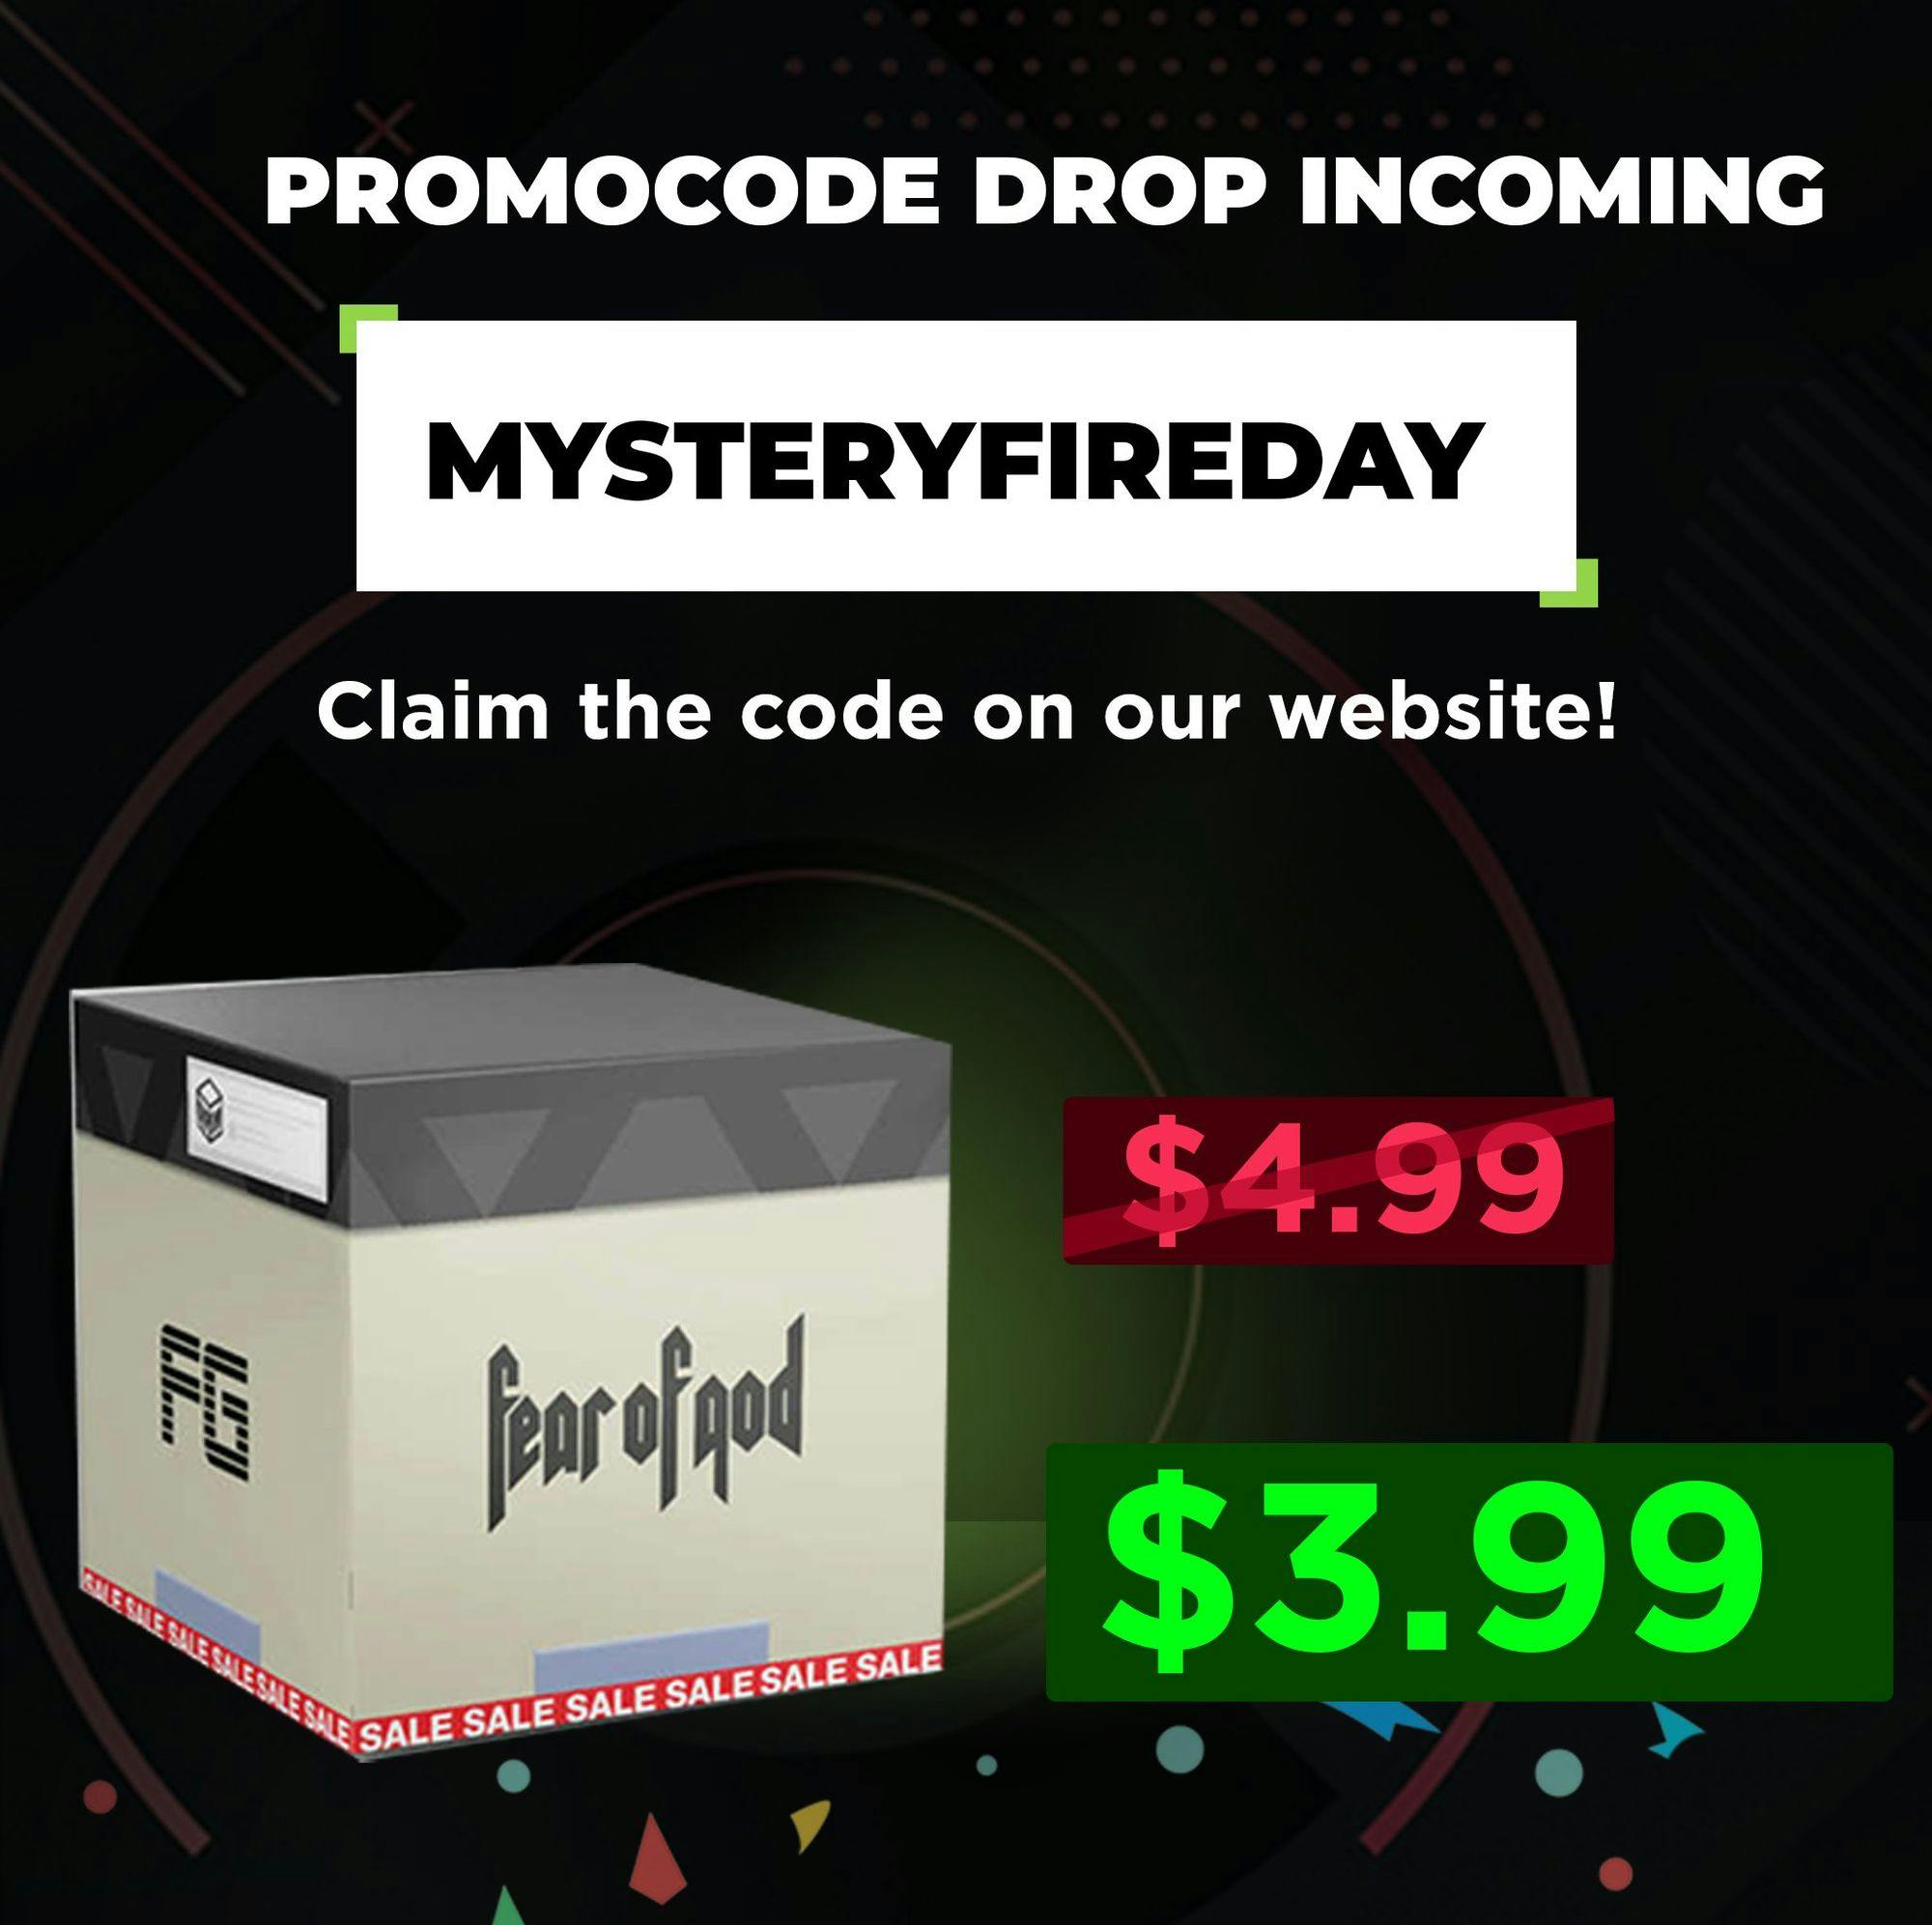 Dripdraw's mystery box promo code social media post 